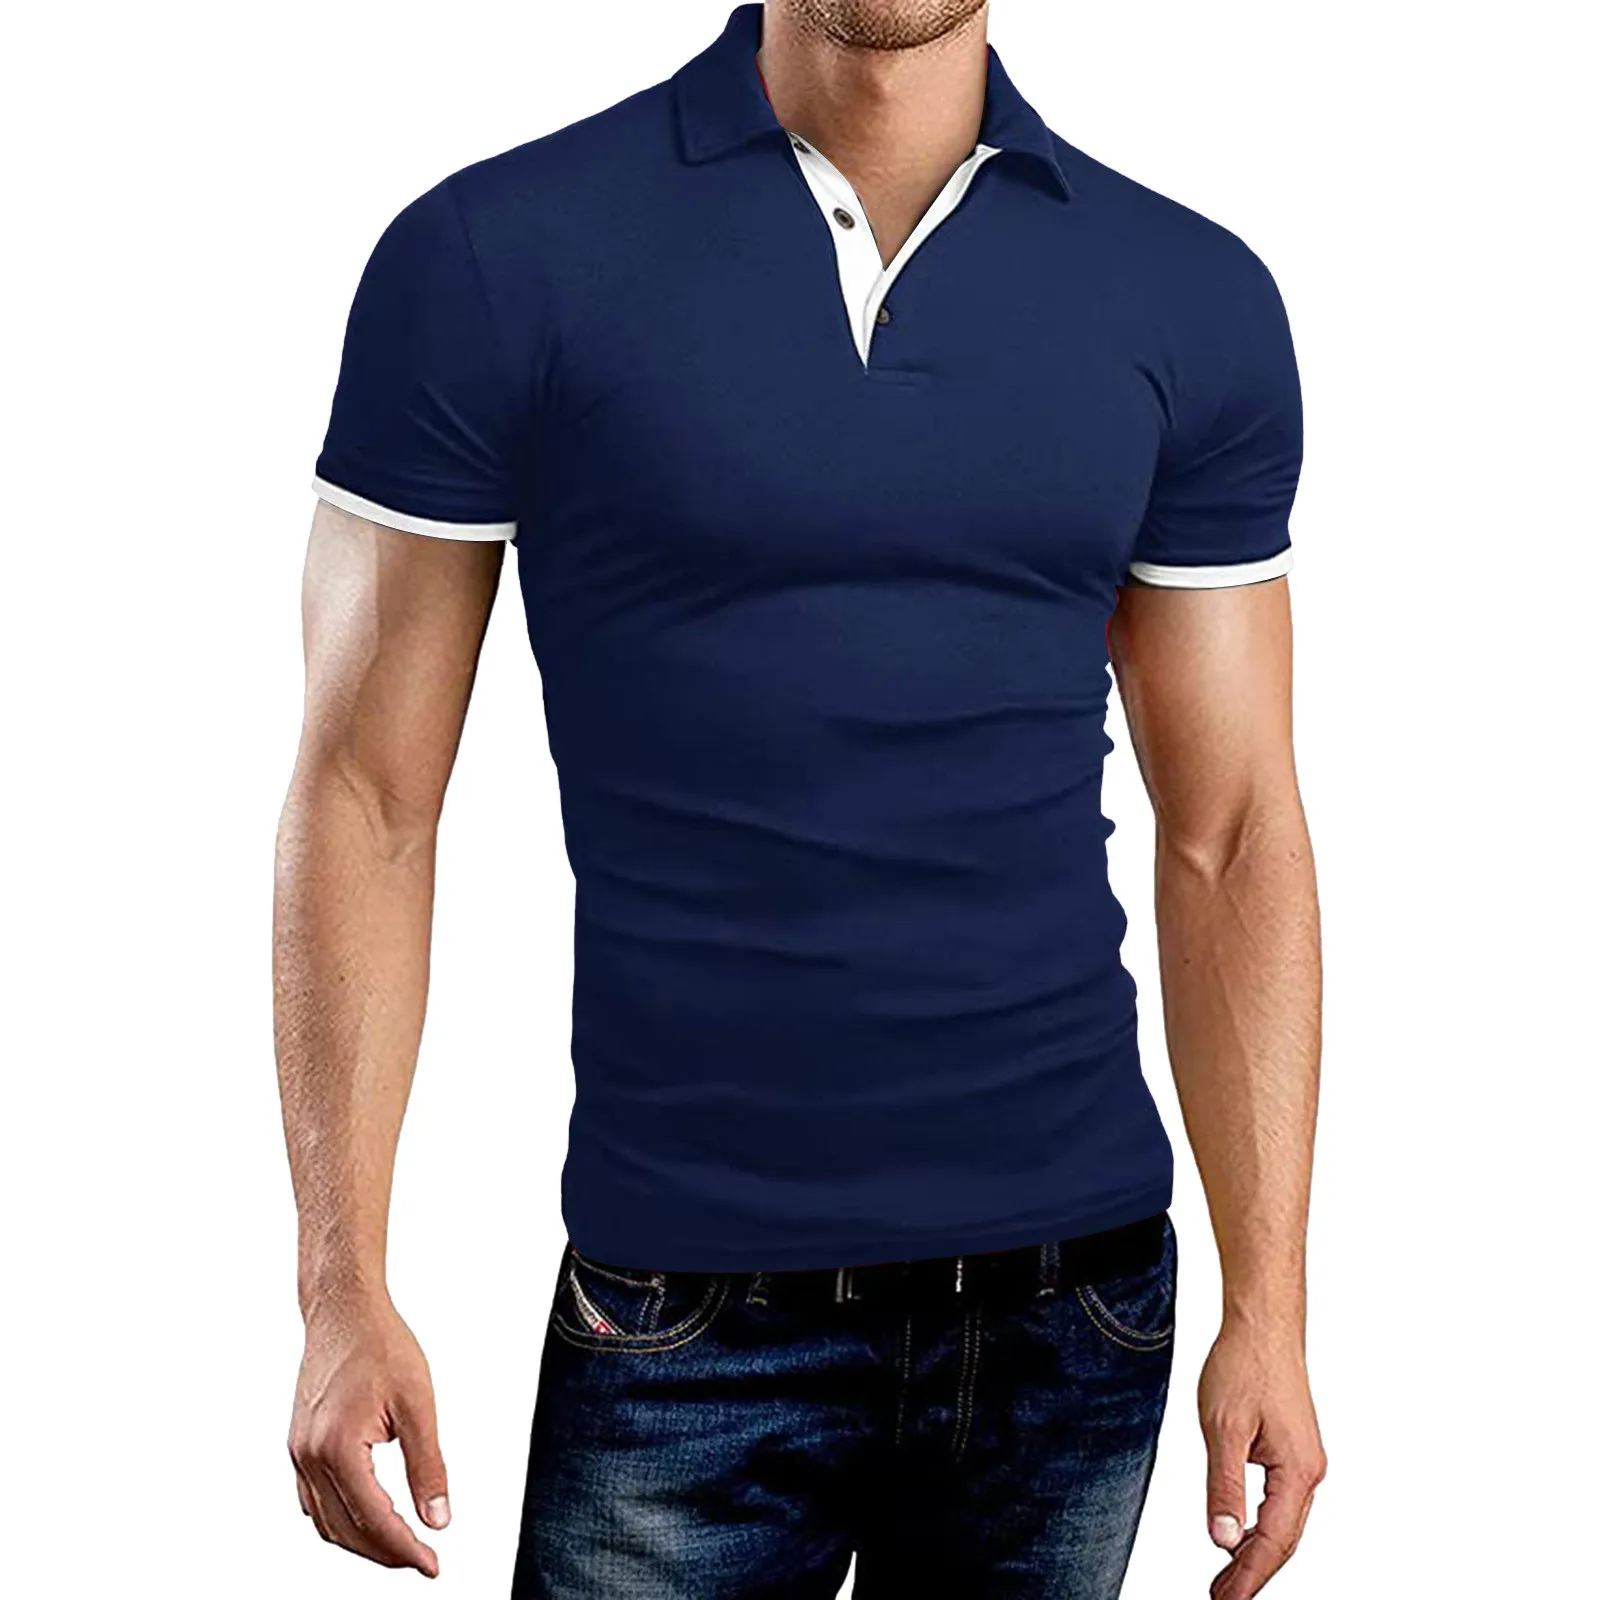 Mens Fashion Casual Sports Solid Color Turndown Collar Short Sleeve Shirt Top Blouse T Shirts for Men Bulk